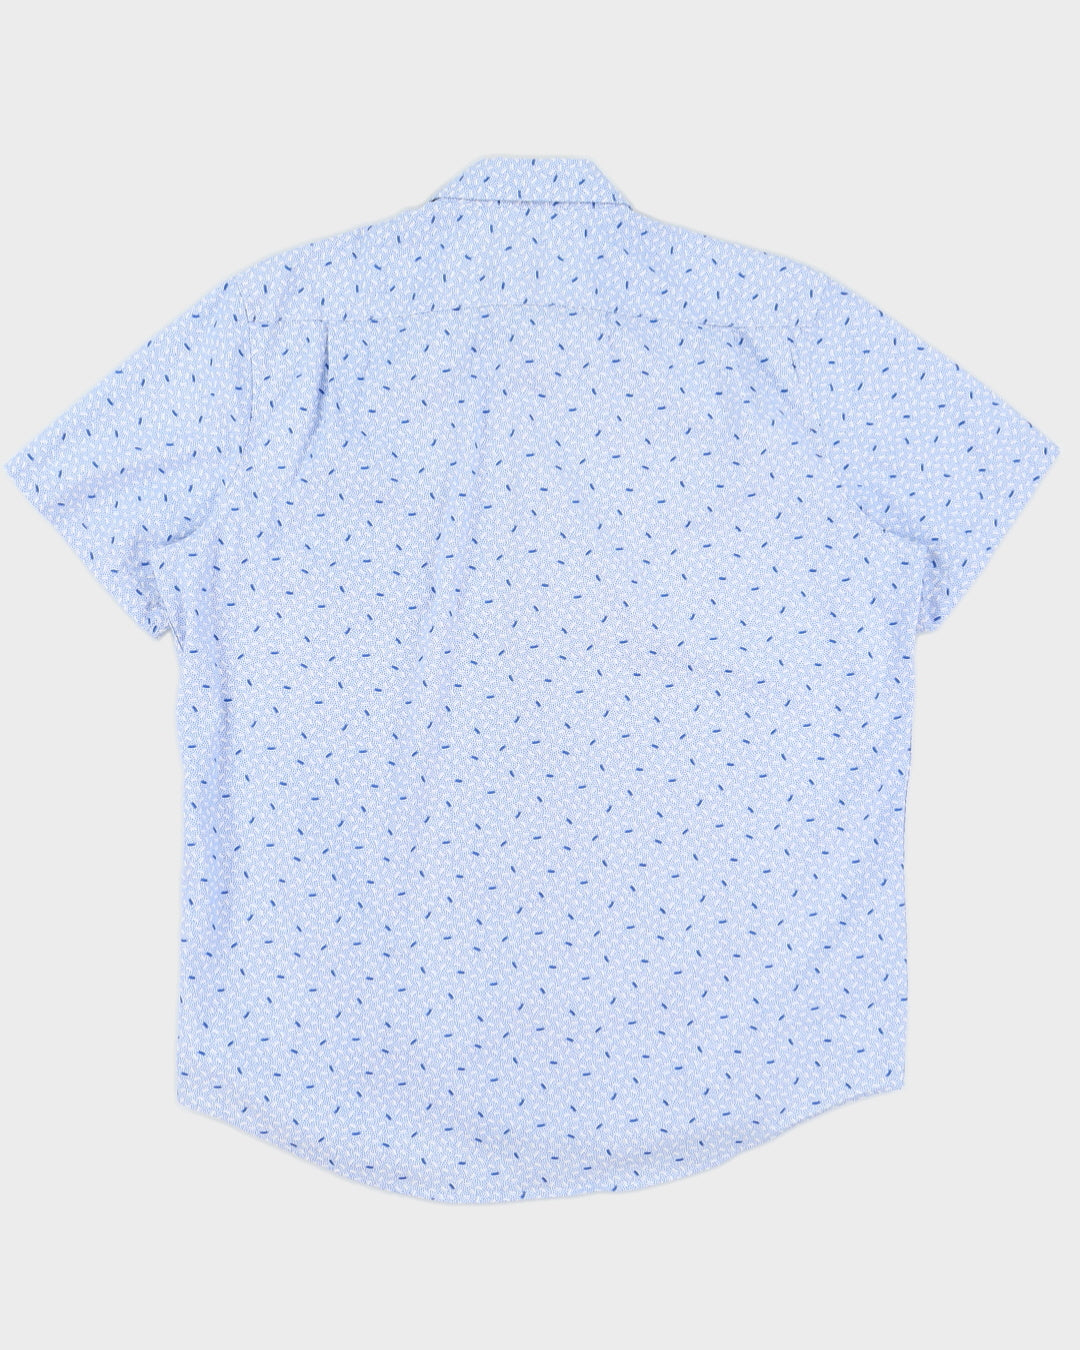 Michael Kors Blue Printed Shirt - L